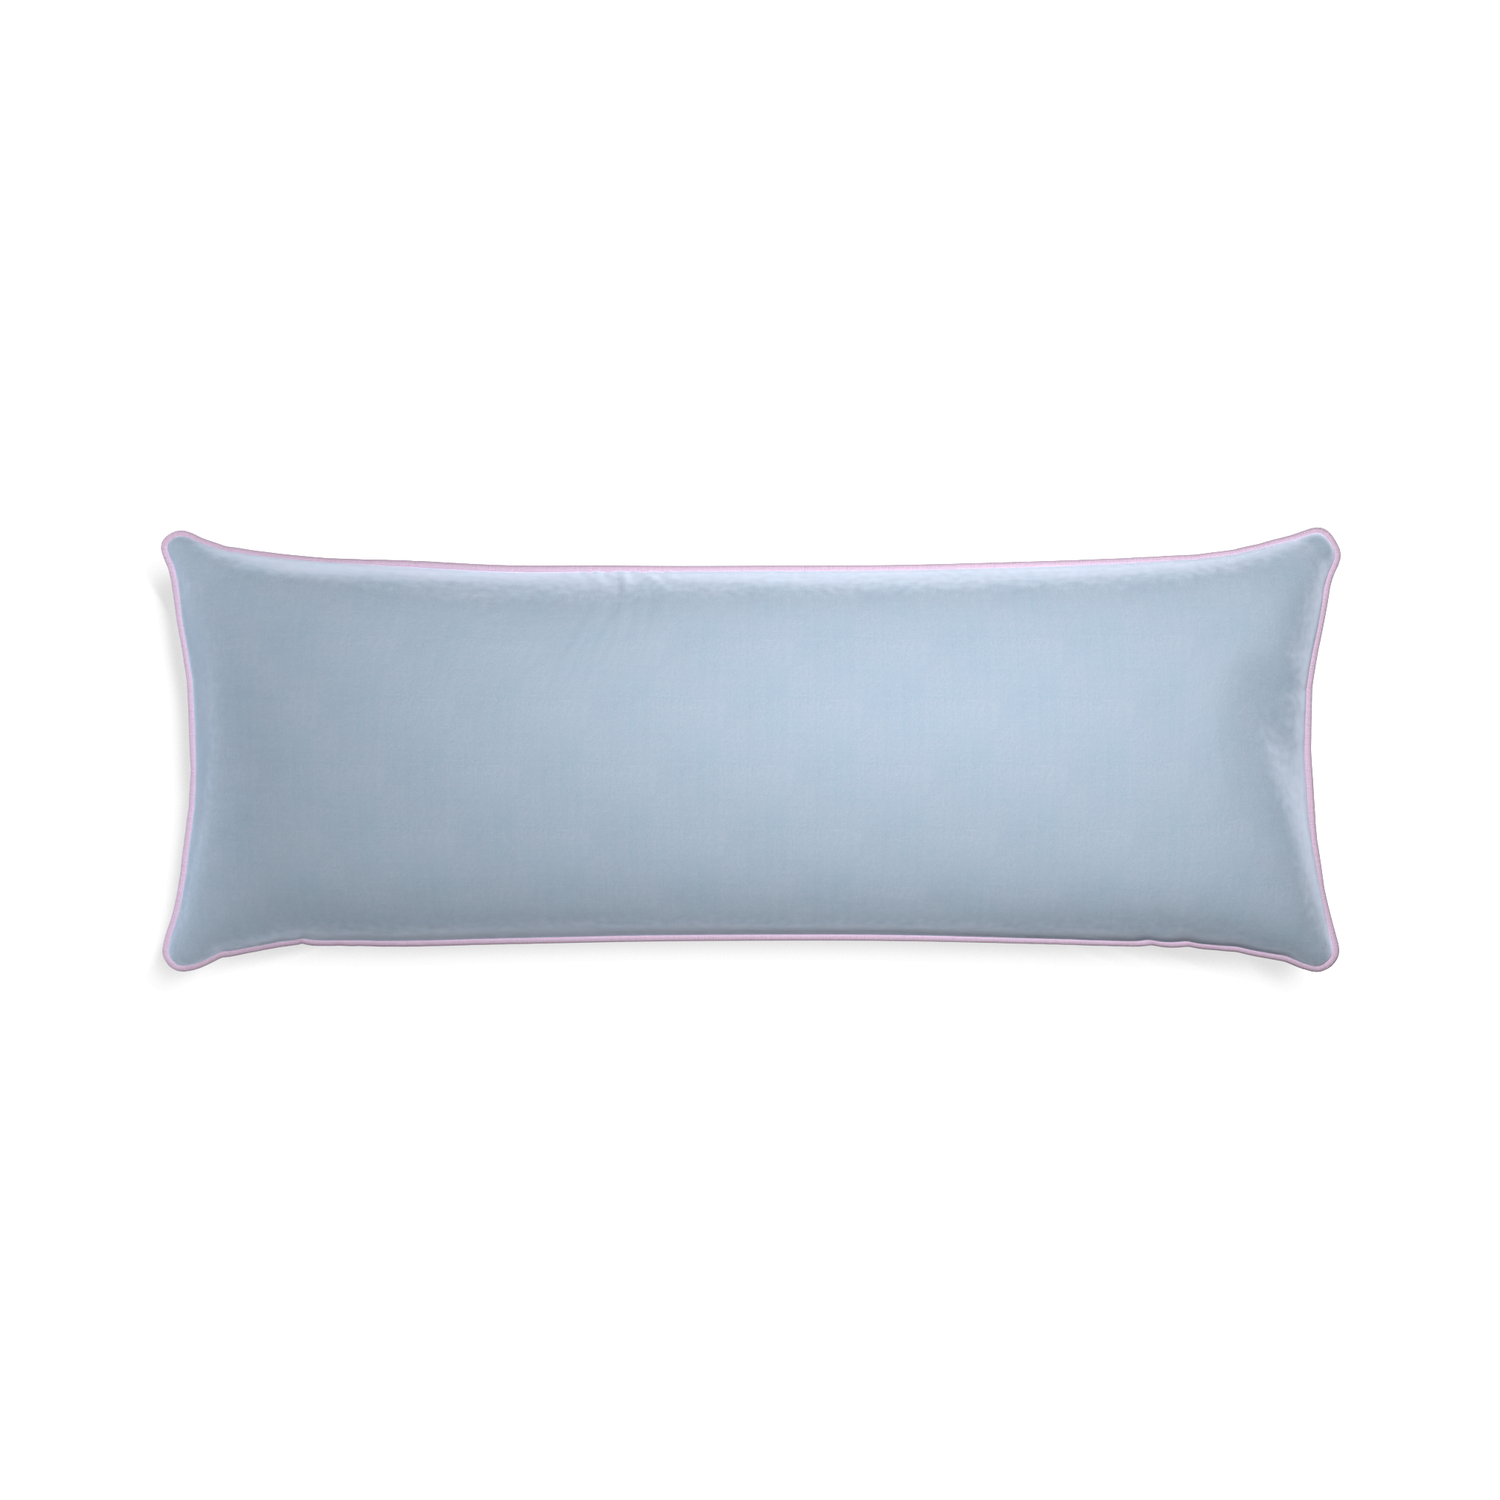 Xl-lumbar sky velvet custom pillow with l piping on white background